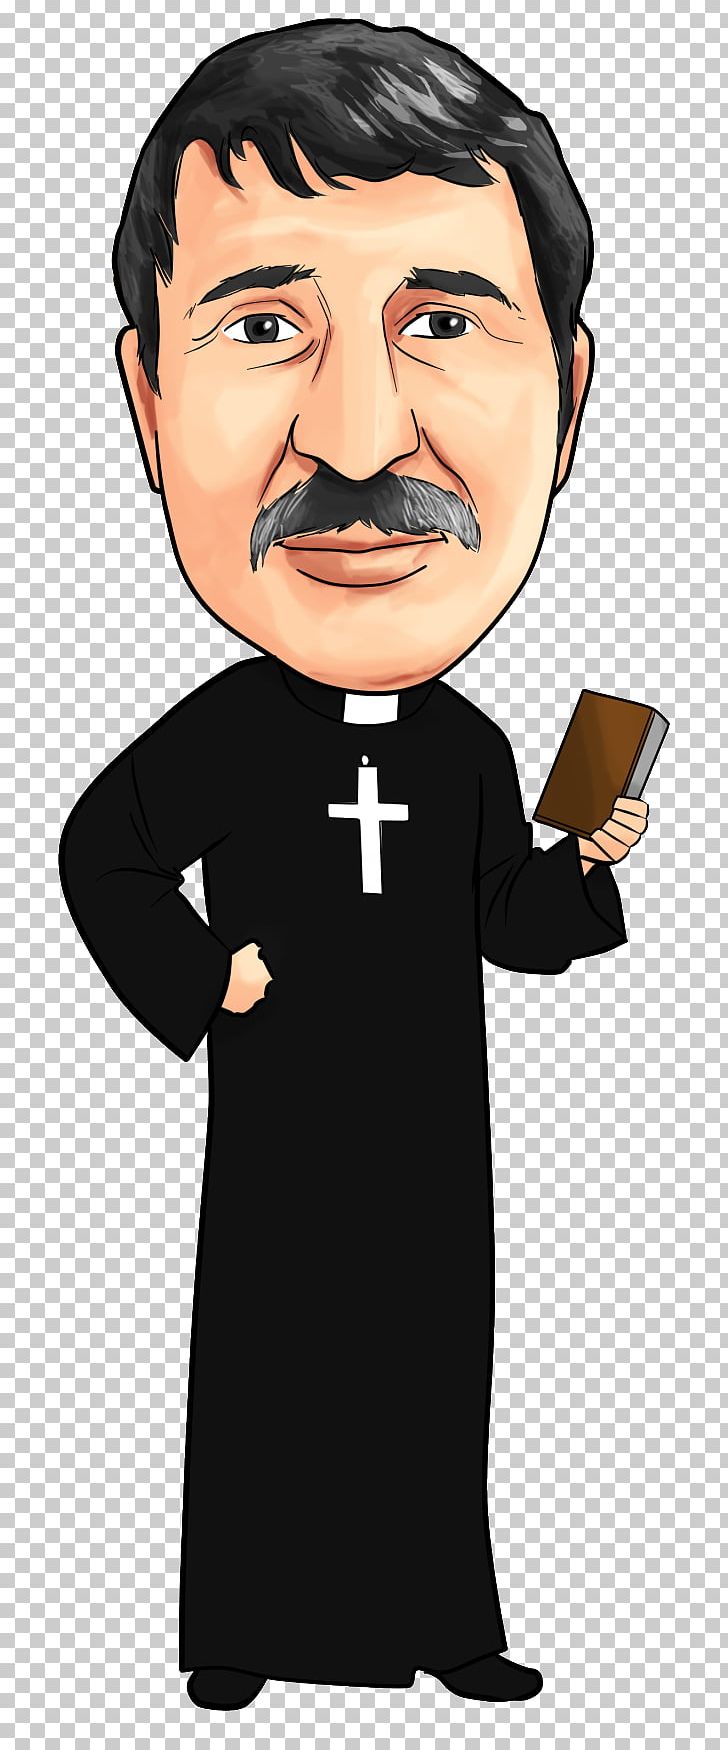 Cartoon Caricature Priest PNG, Clipart, Art, Beard, Caricature, Cartoon, Character Free PNG Download